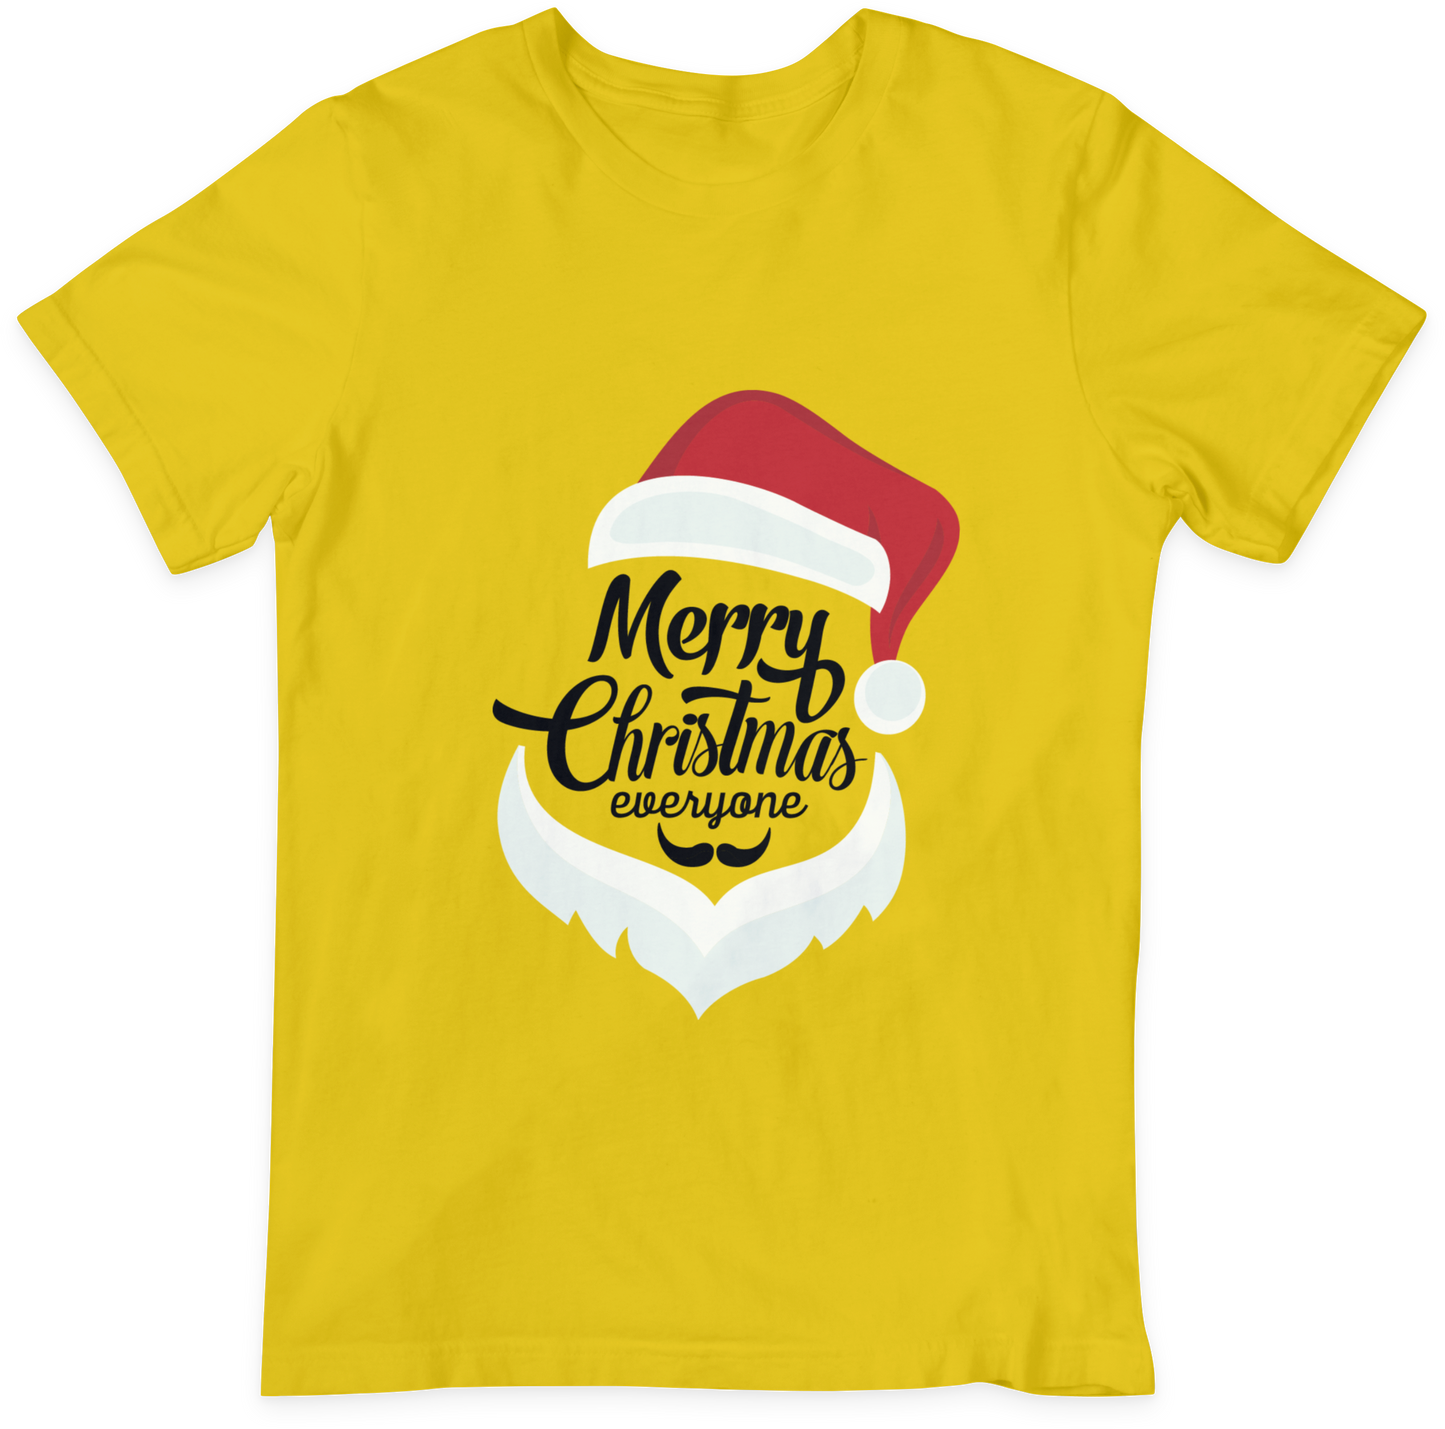 Merry Christmas Design T-shirt